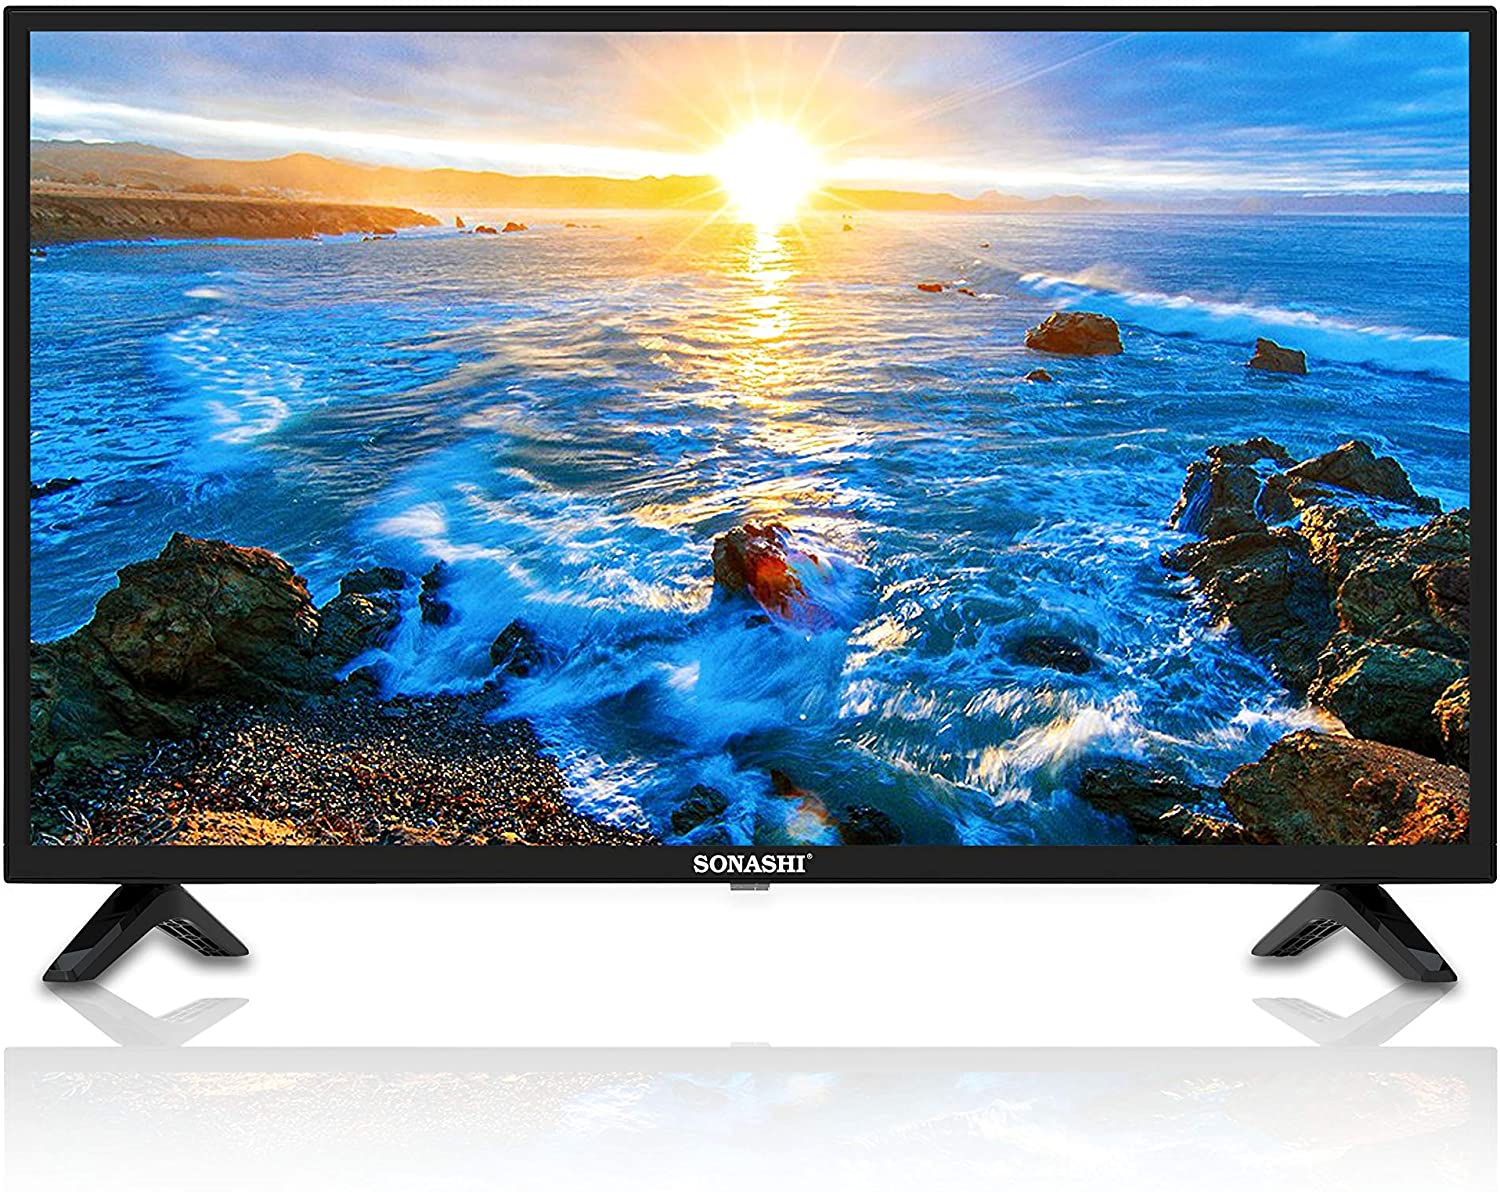 Sonashi 65-Inch Ultra HD LED Smart TV